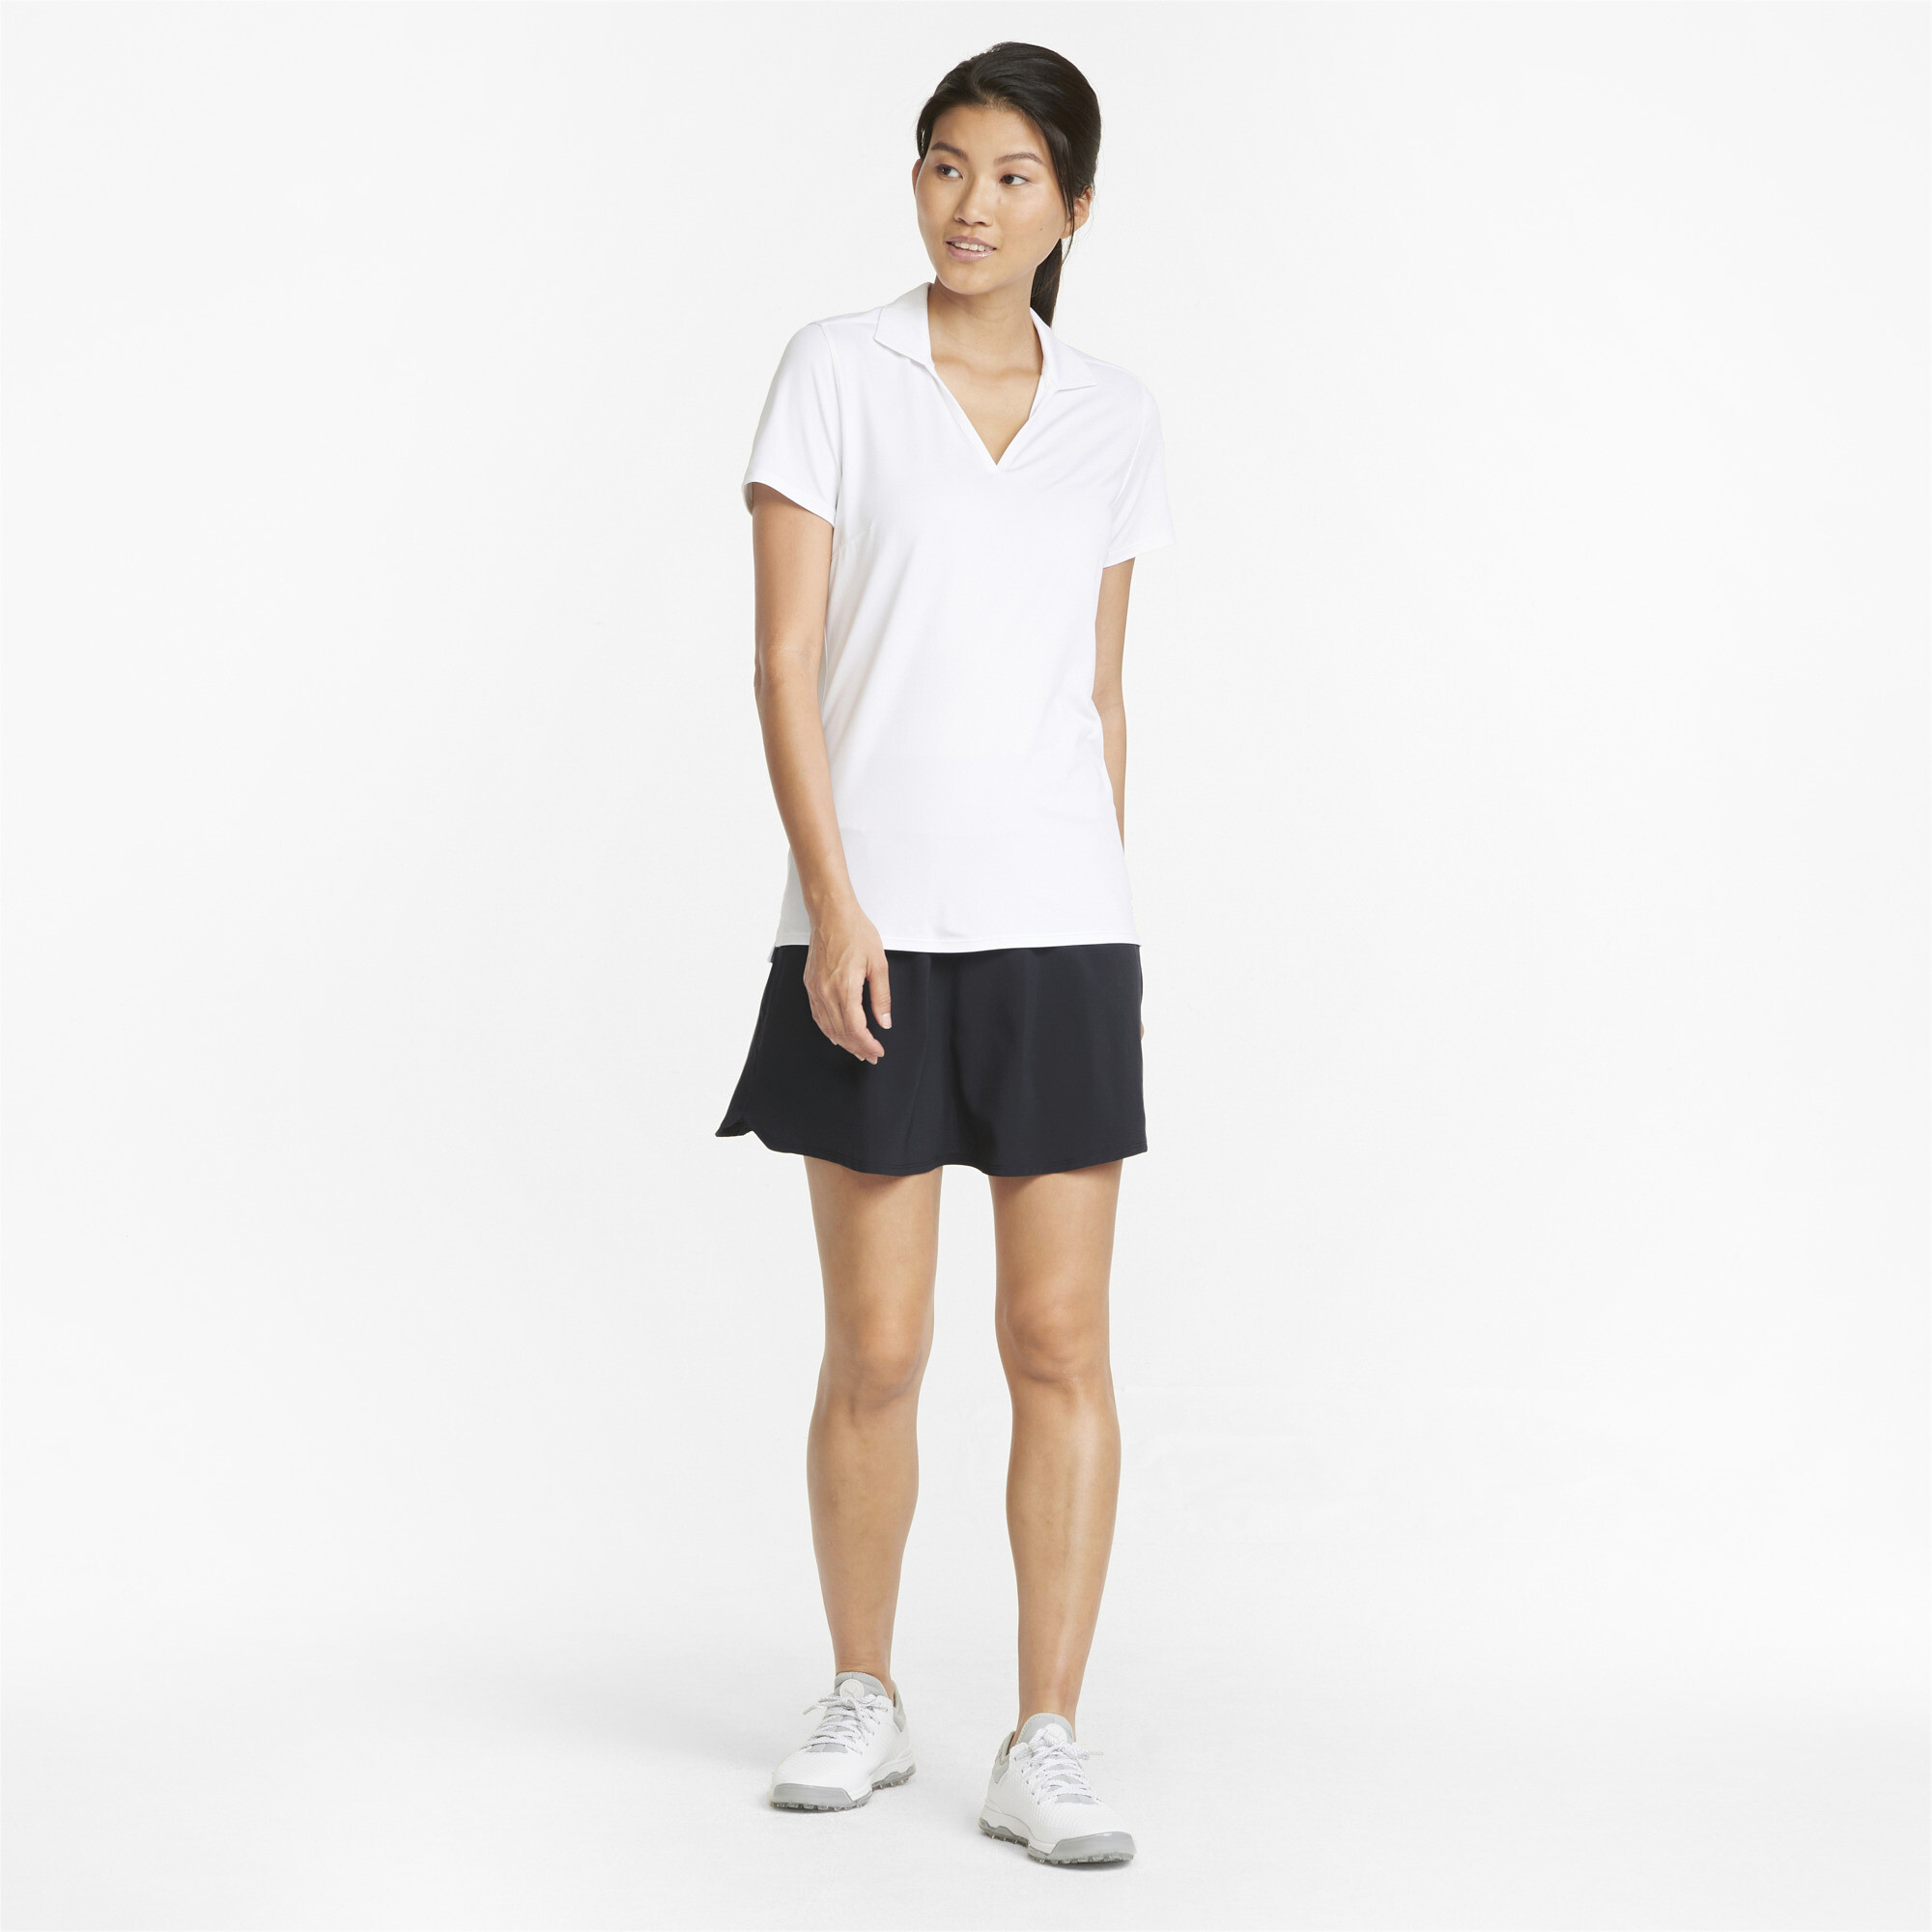 Women's Puma PWRSHAPE Solid's Golf Skirt, Black, Size L/L, Clothing